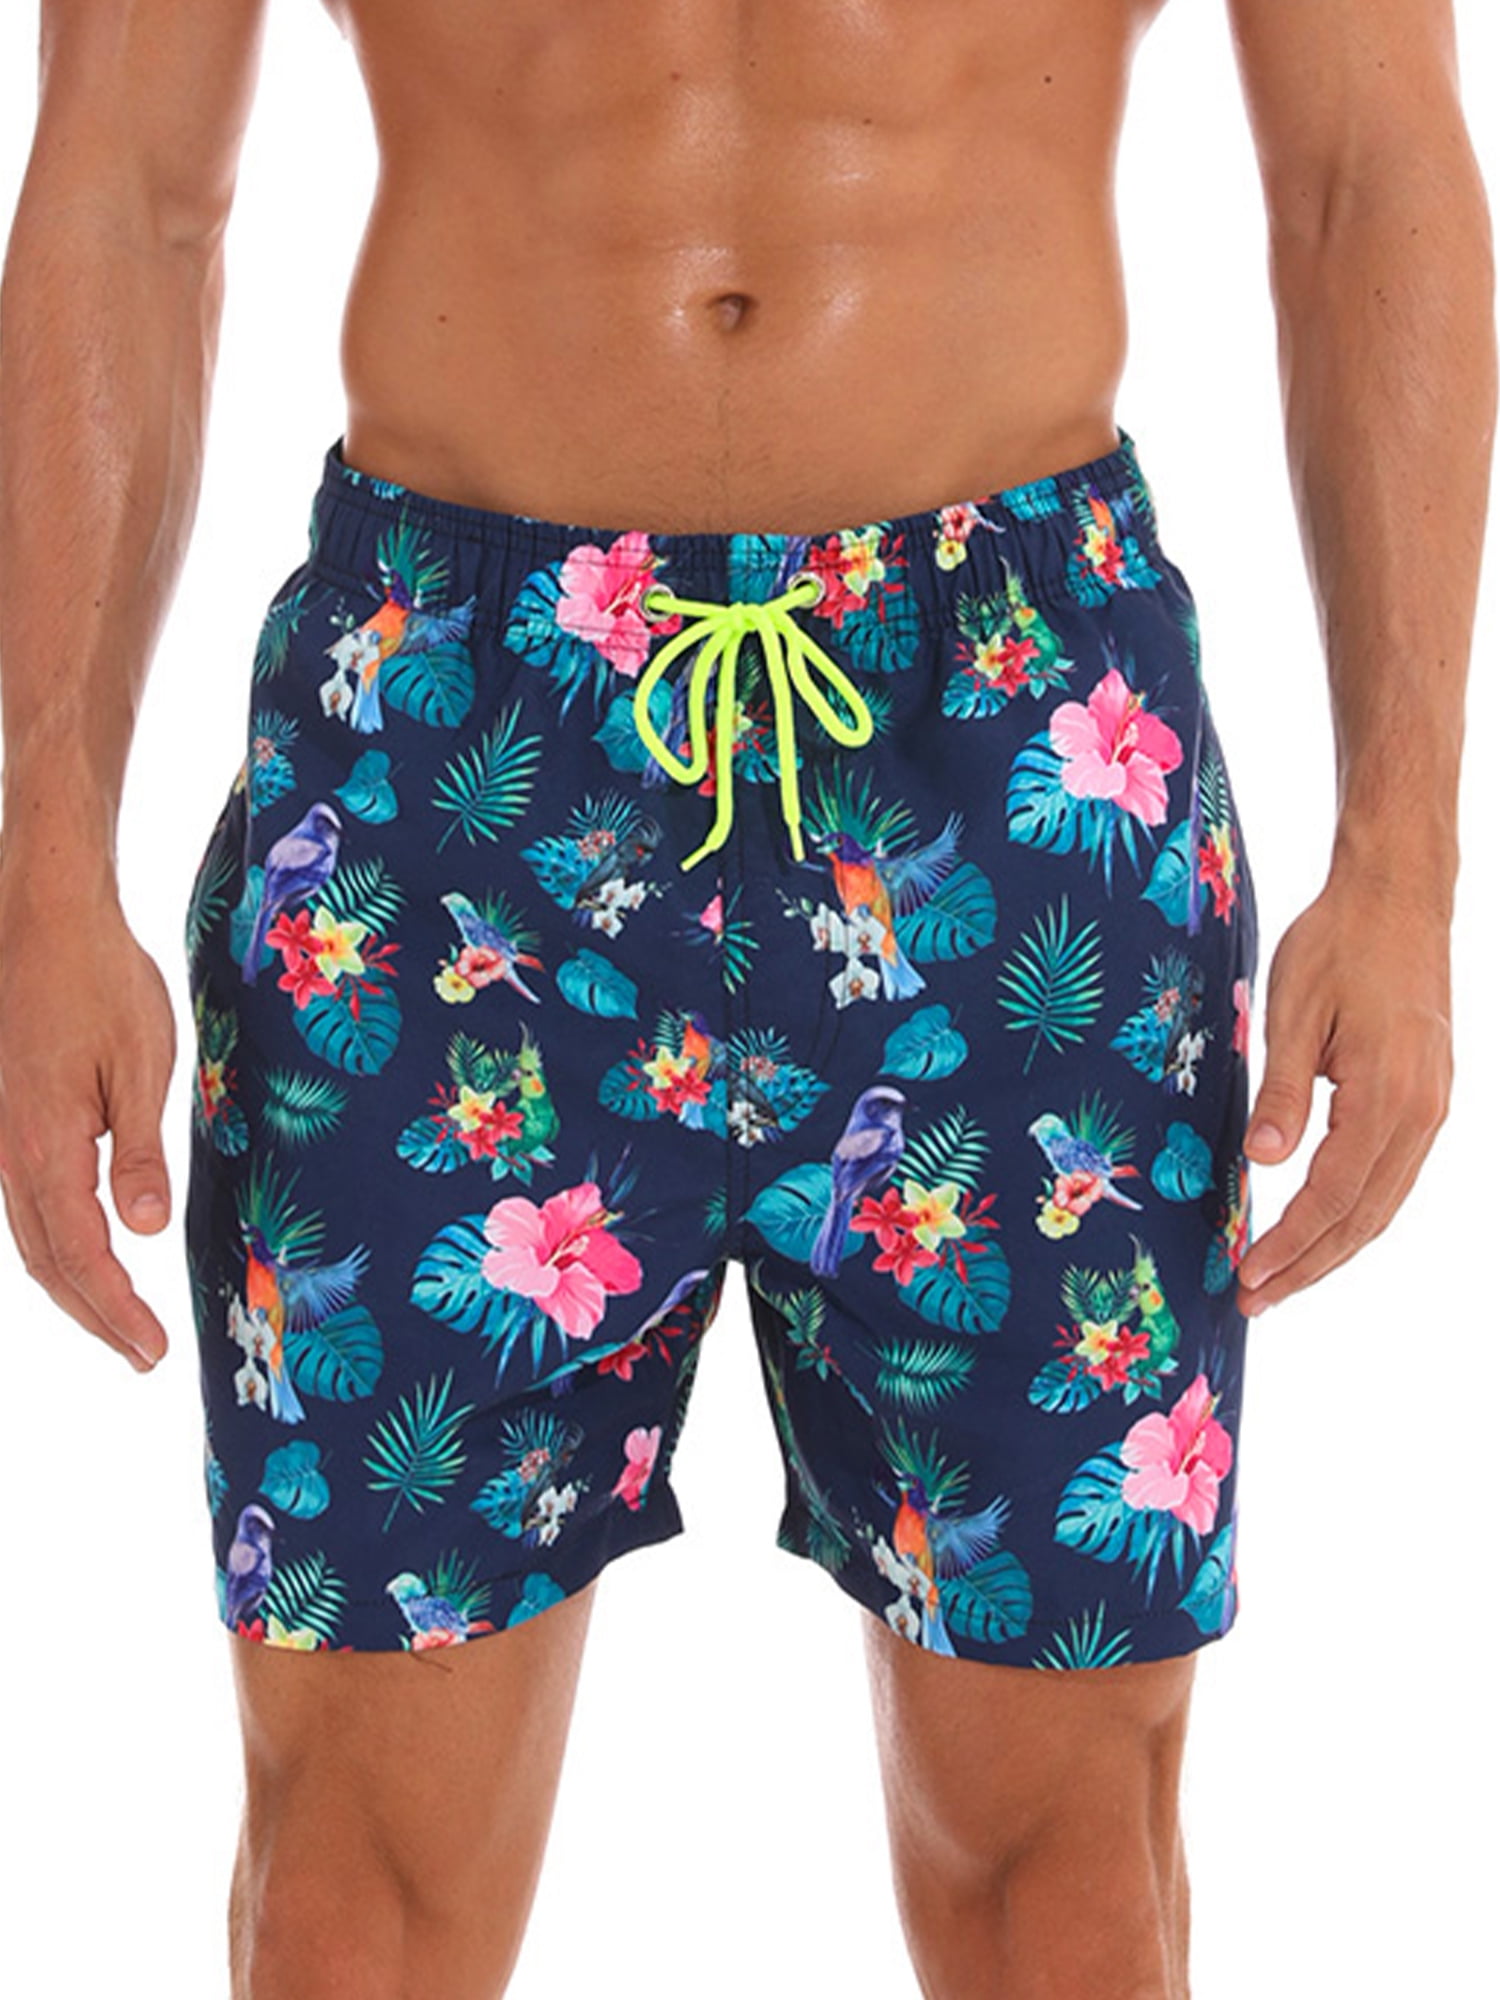 Star Sky Print Swim Trunks Summer Beach Shorts Pockets Boardshorts for Men